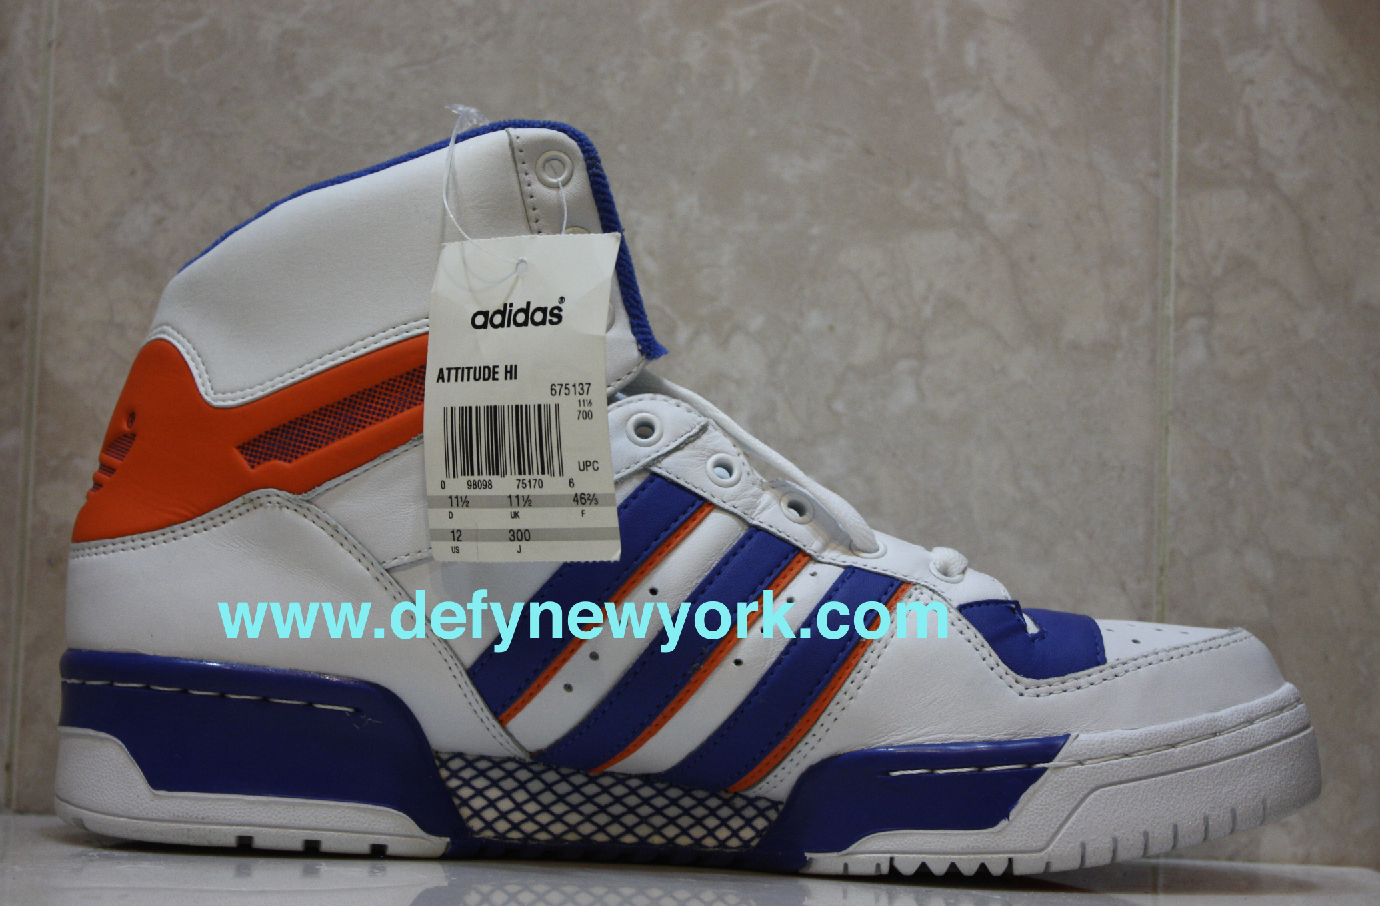 Adidas Attitude Hi 2001 Retro (White/Orange/Blue) : DeFY. New York ...